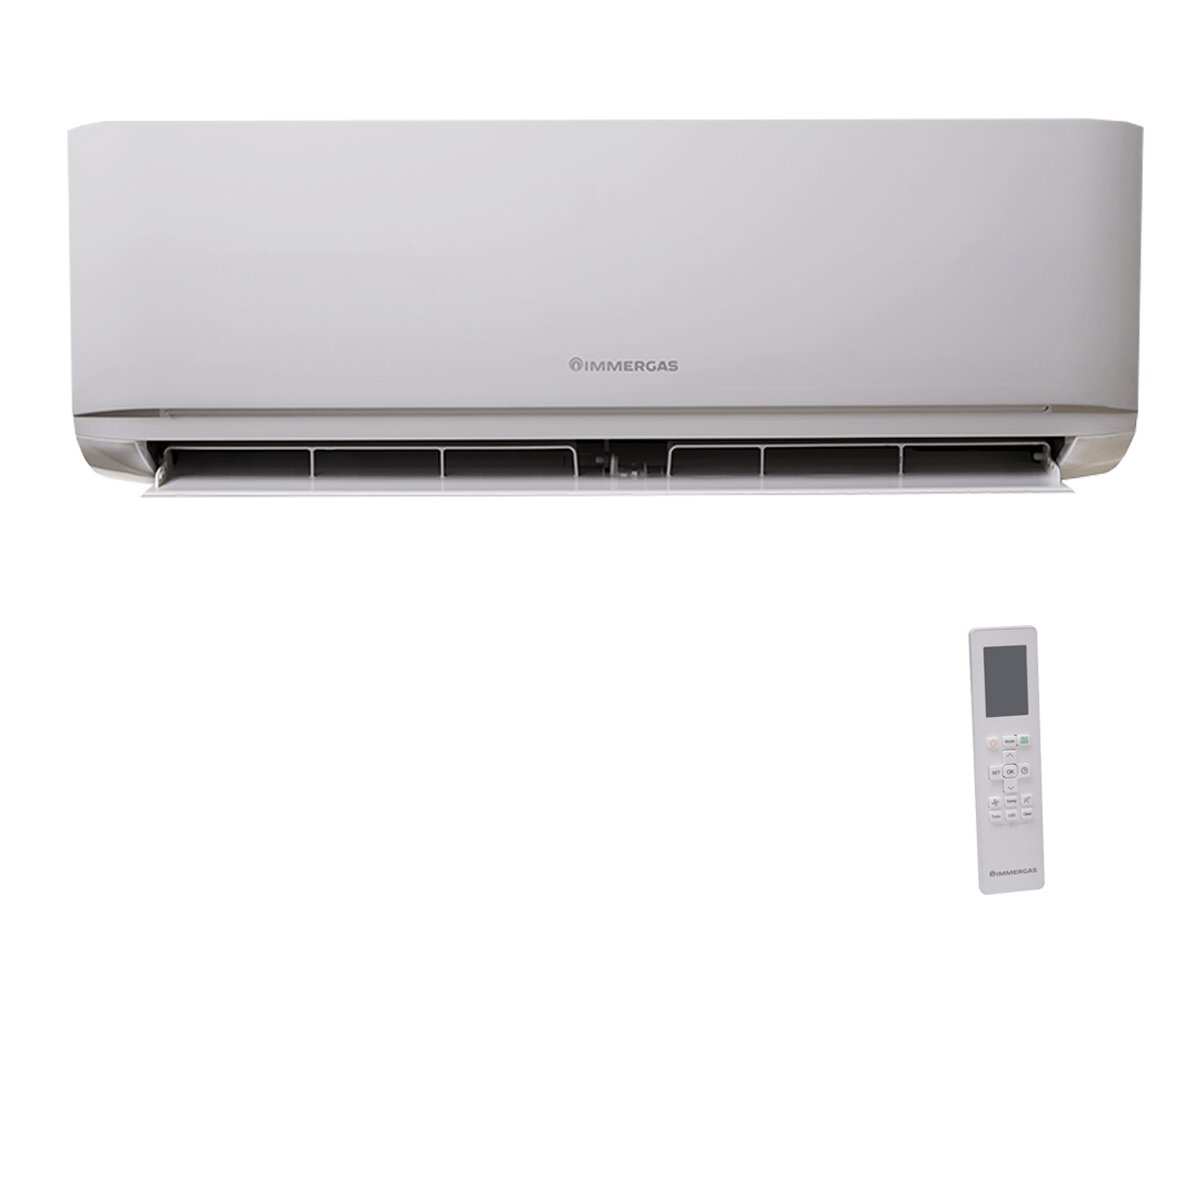 Immergas GOTHA 9000 BTU R32 Inverter Air Conditioner A+++/A++ WiFi